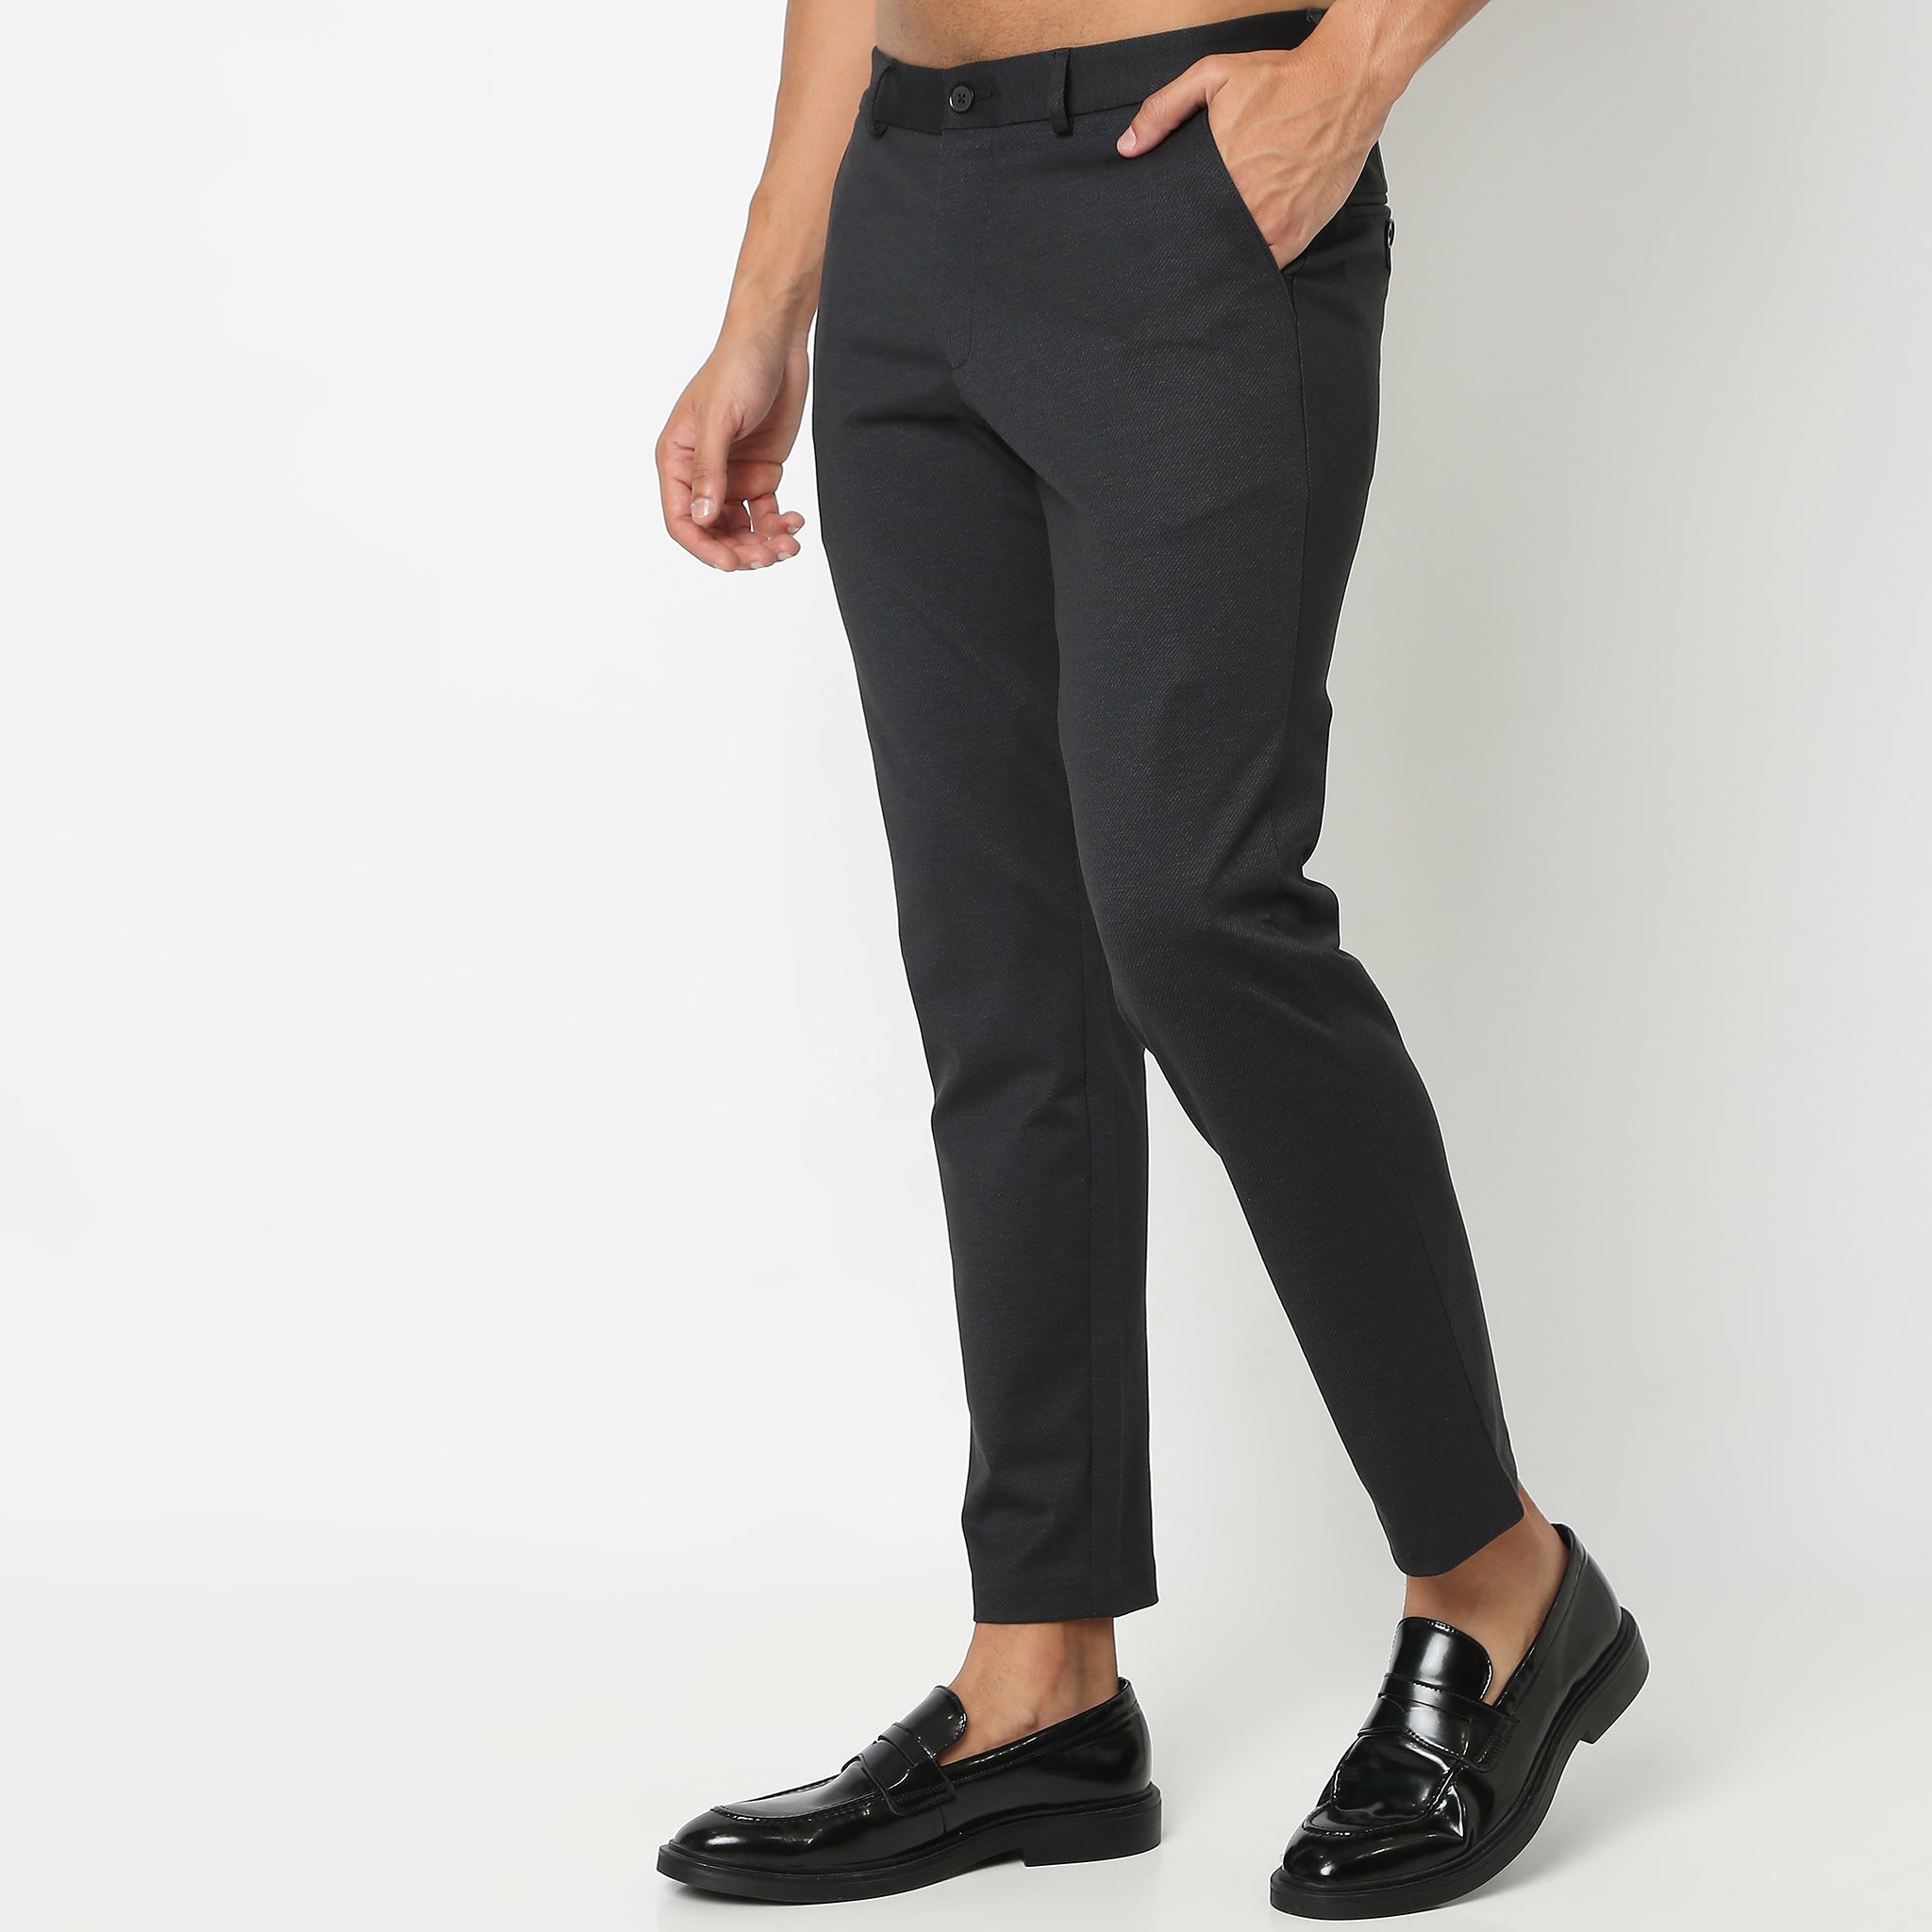 Ankle Fit Dark Grey 4 Way Stretchable Formal Pants – Stagbeetle